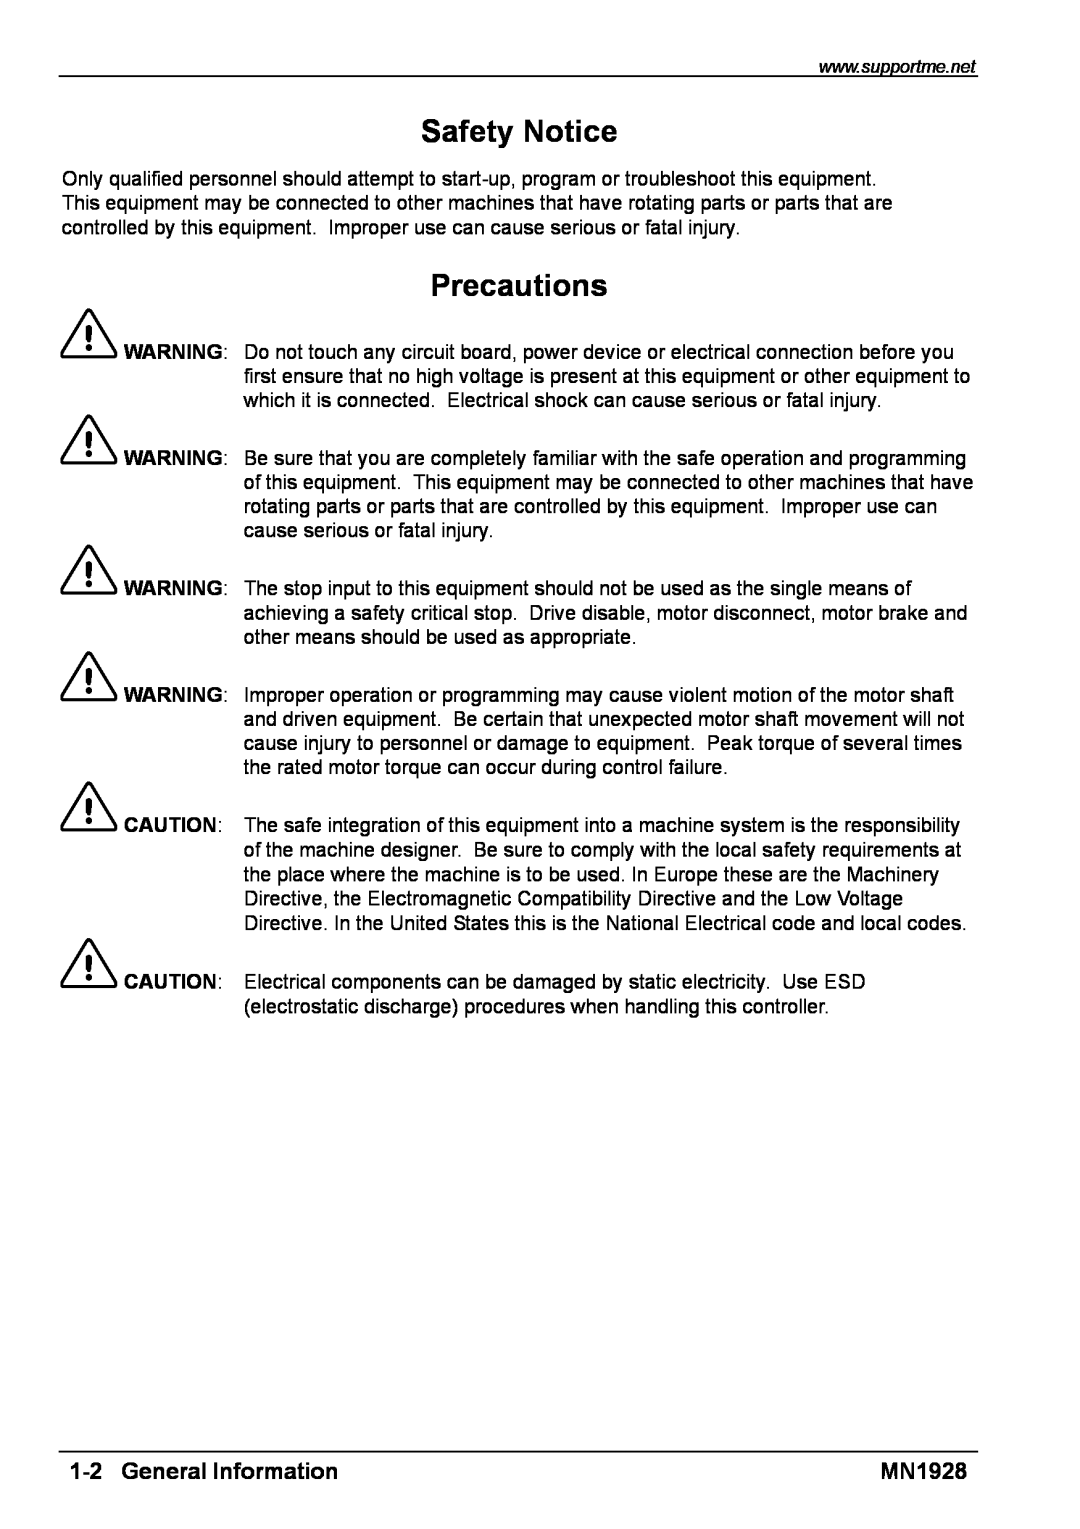 Baldor MN1928 installation manual Safety Notice, Precautions, General Information 